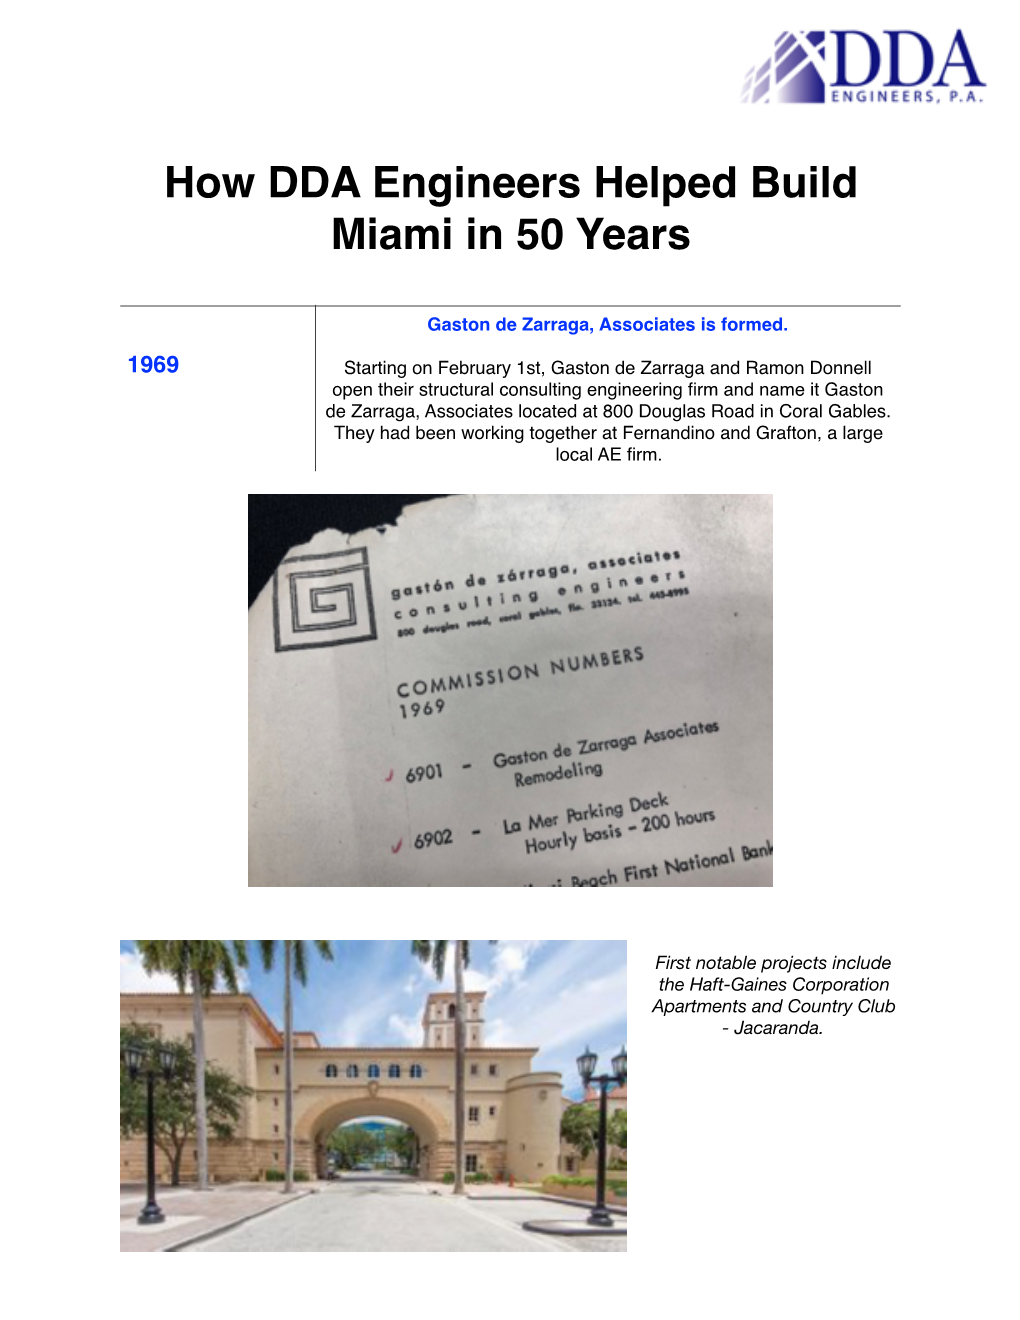 DDA Engineers Helped Build Miami in 50 Years